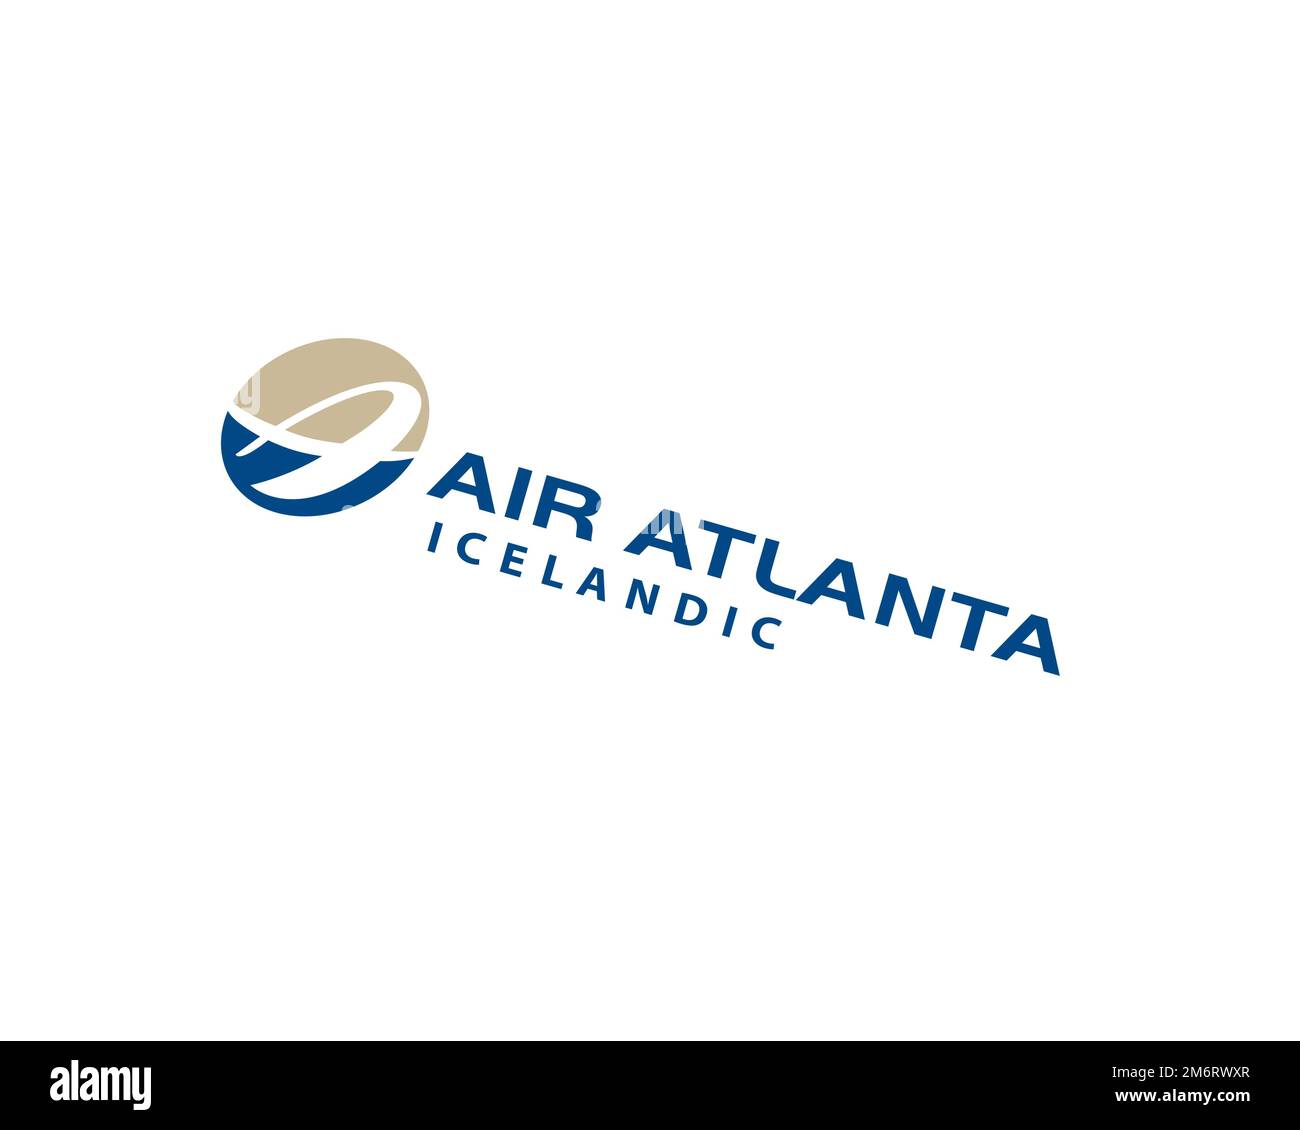 Air Atlanta islandese, logo ruotato, sfondo bianco B Foto Stock